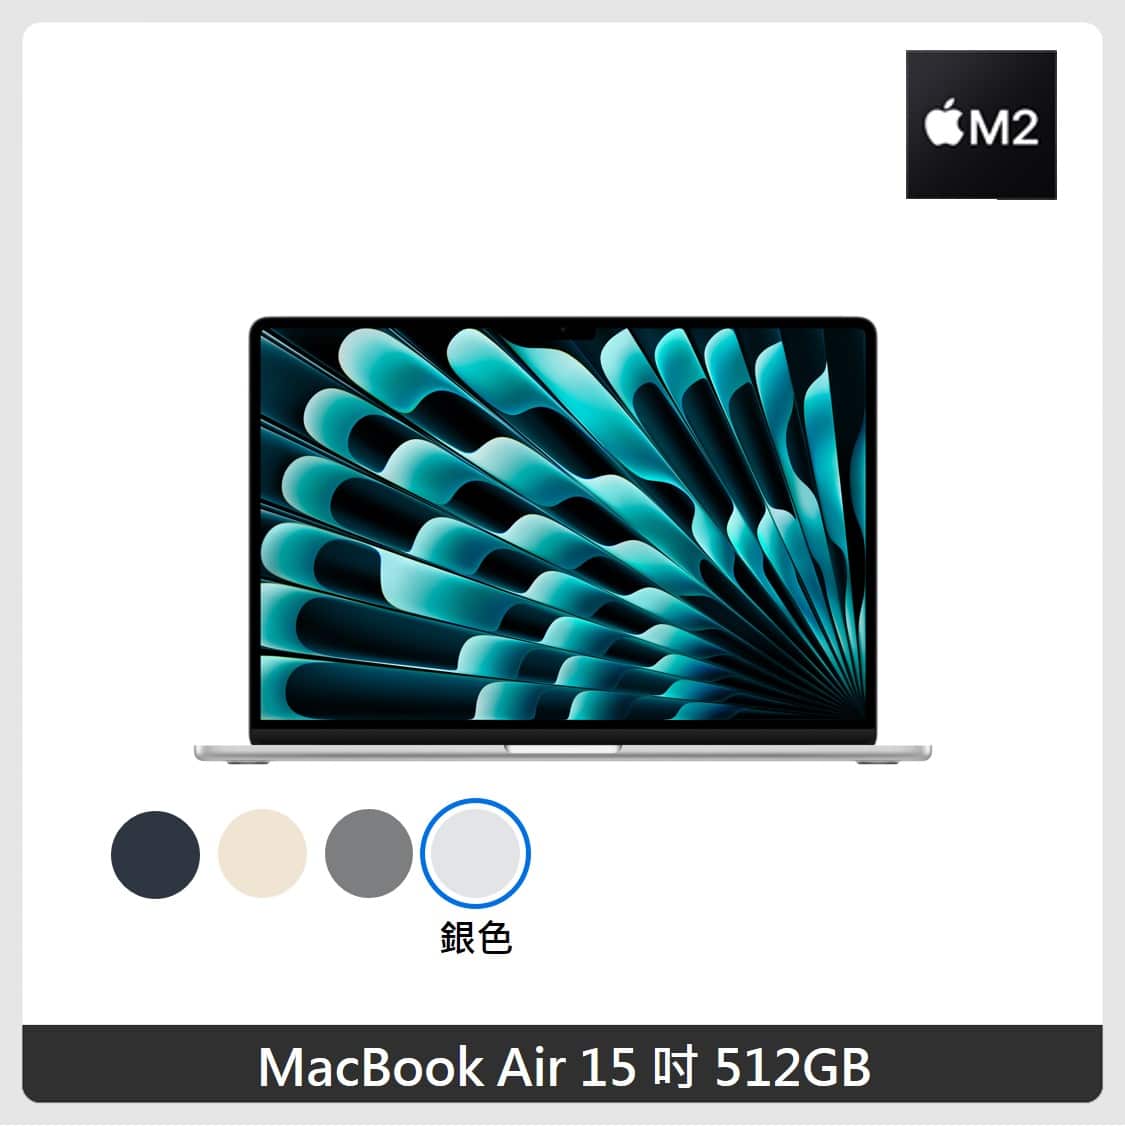 Macbook Air M2 15吋 512GB 銀色